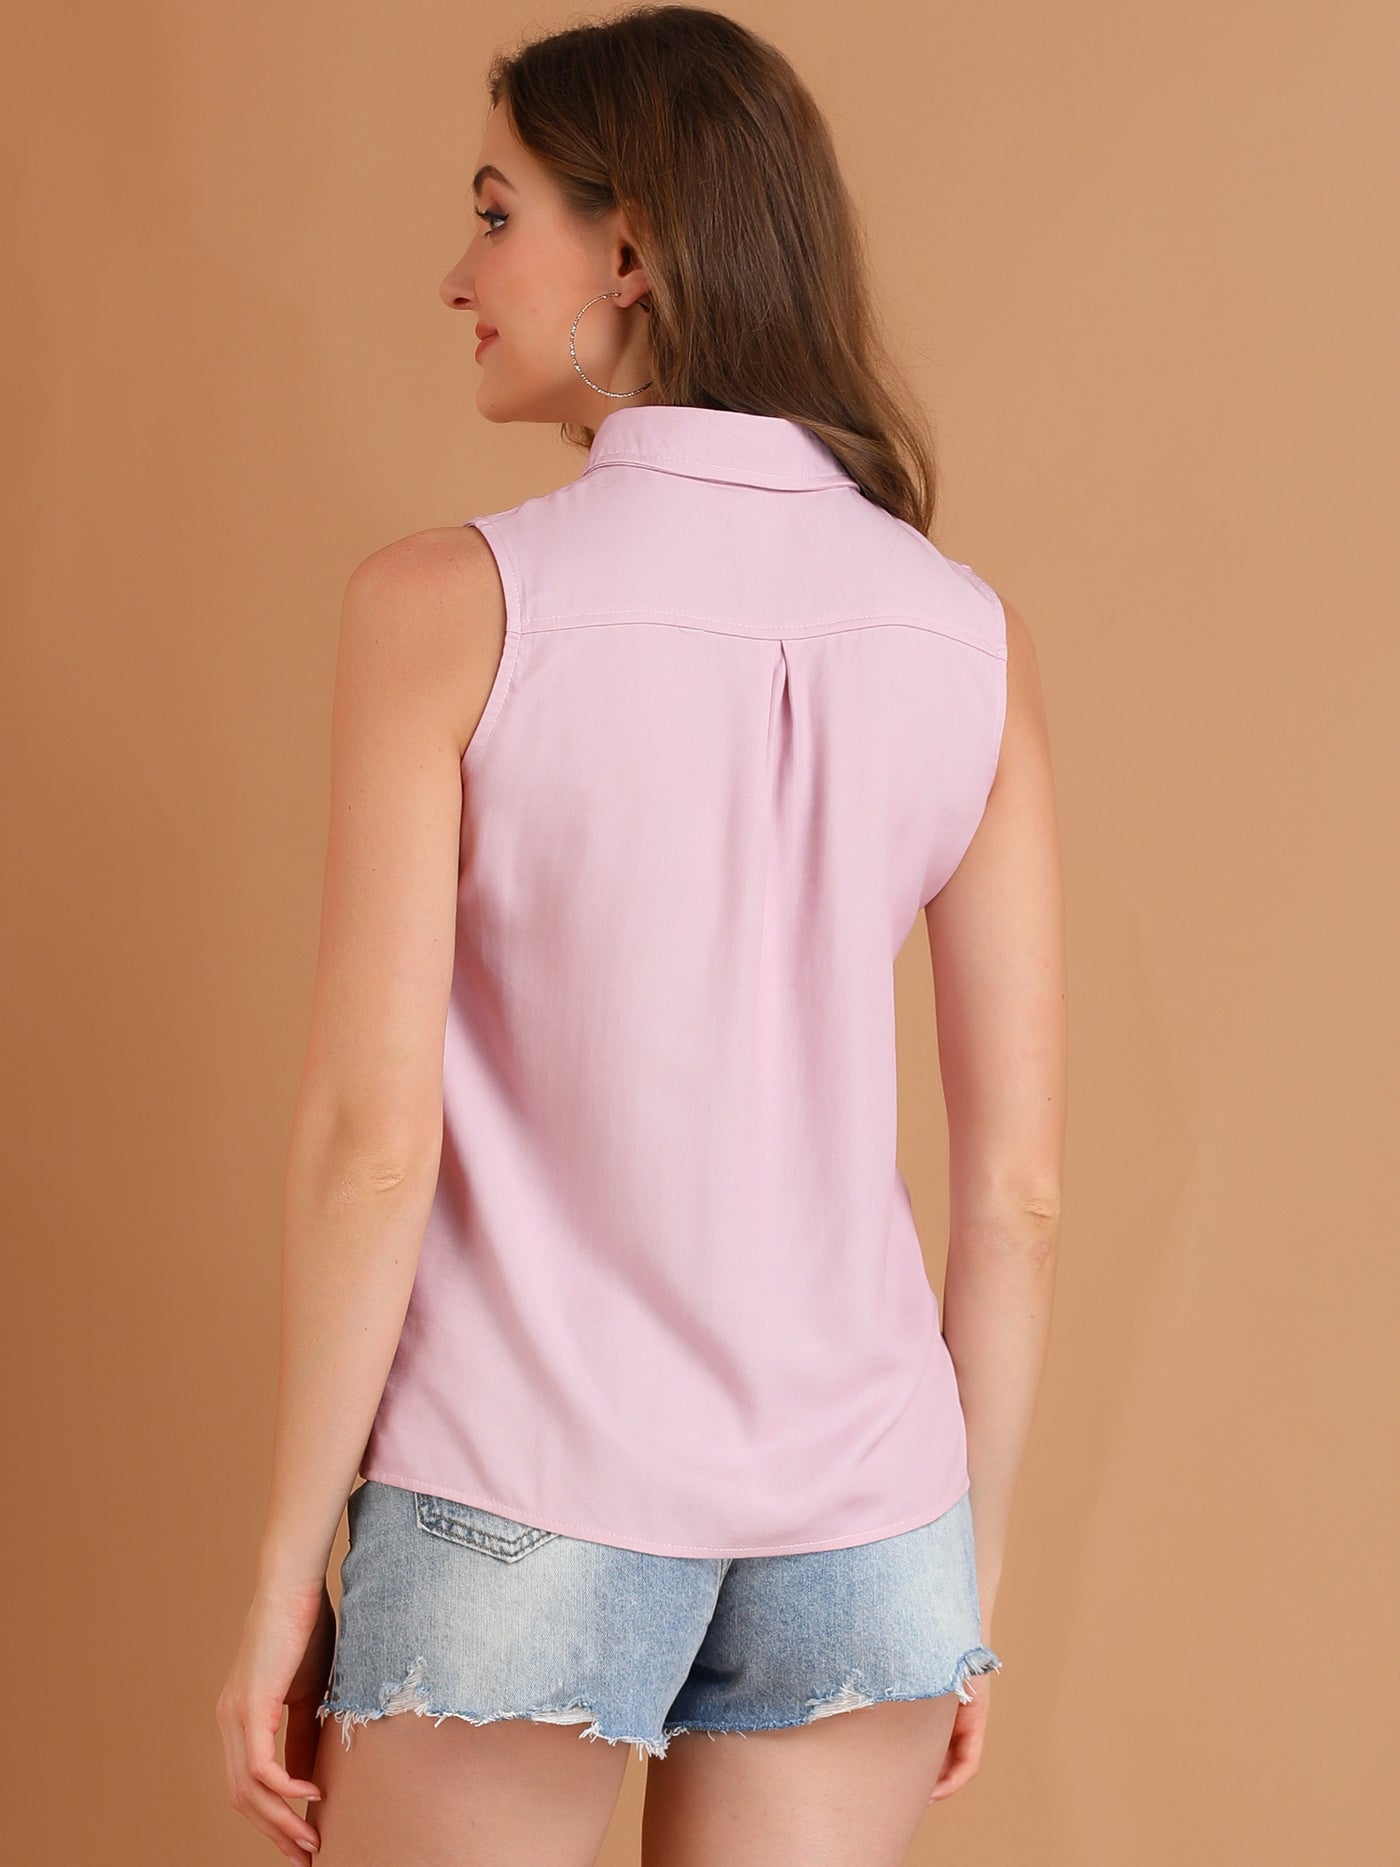 Allegra K Lapel Single Breasted Casual Office Sleeveless Shirt